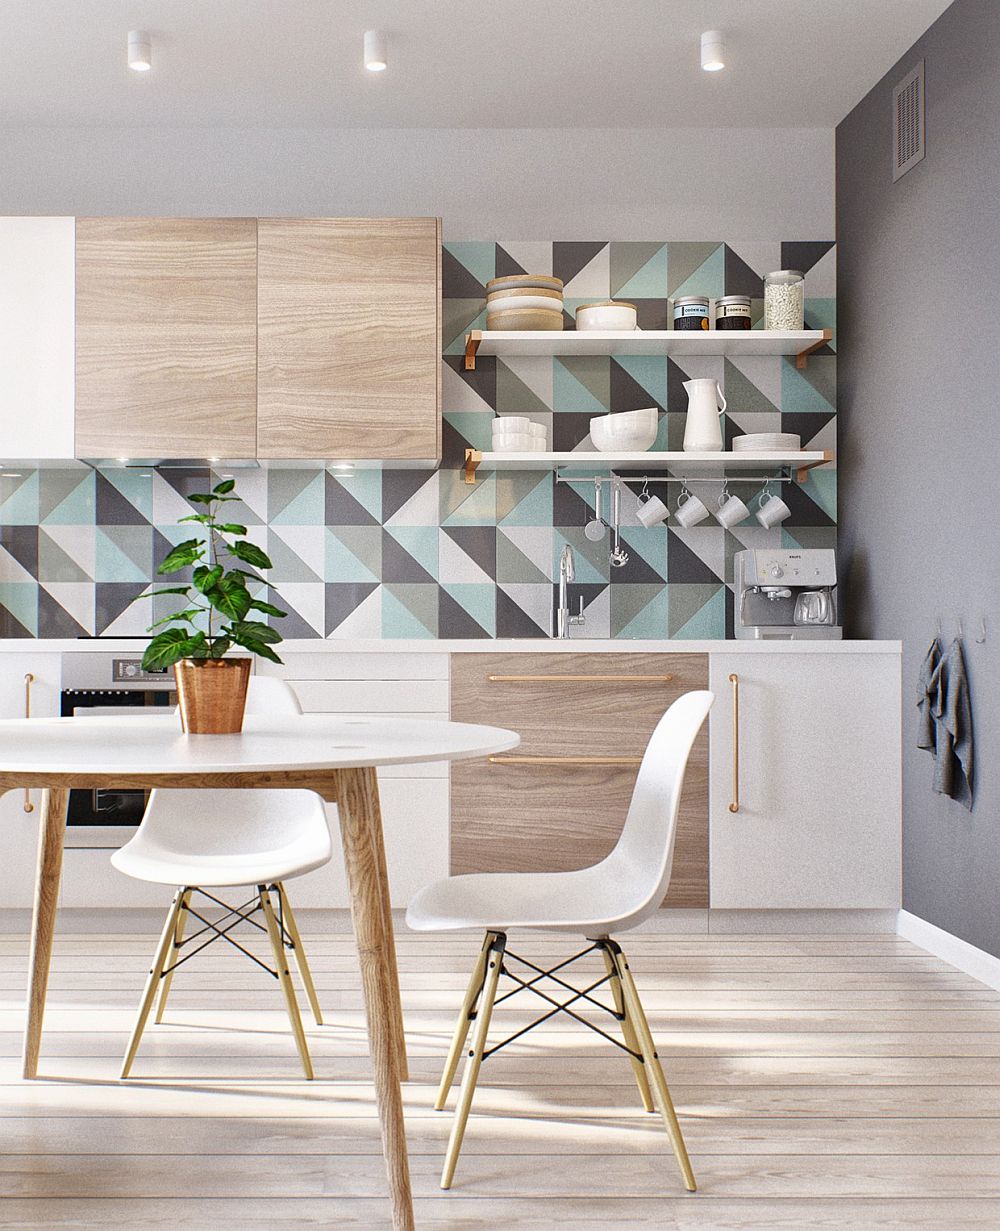 Wonderful use of geometric pattern inside the Scandinavian kitchen design [Design: int2architecture]